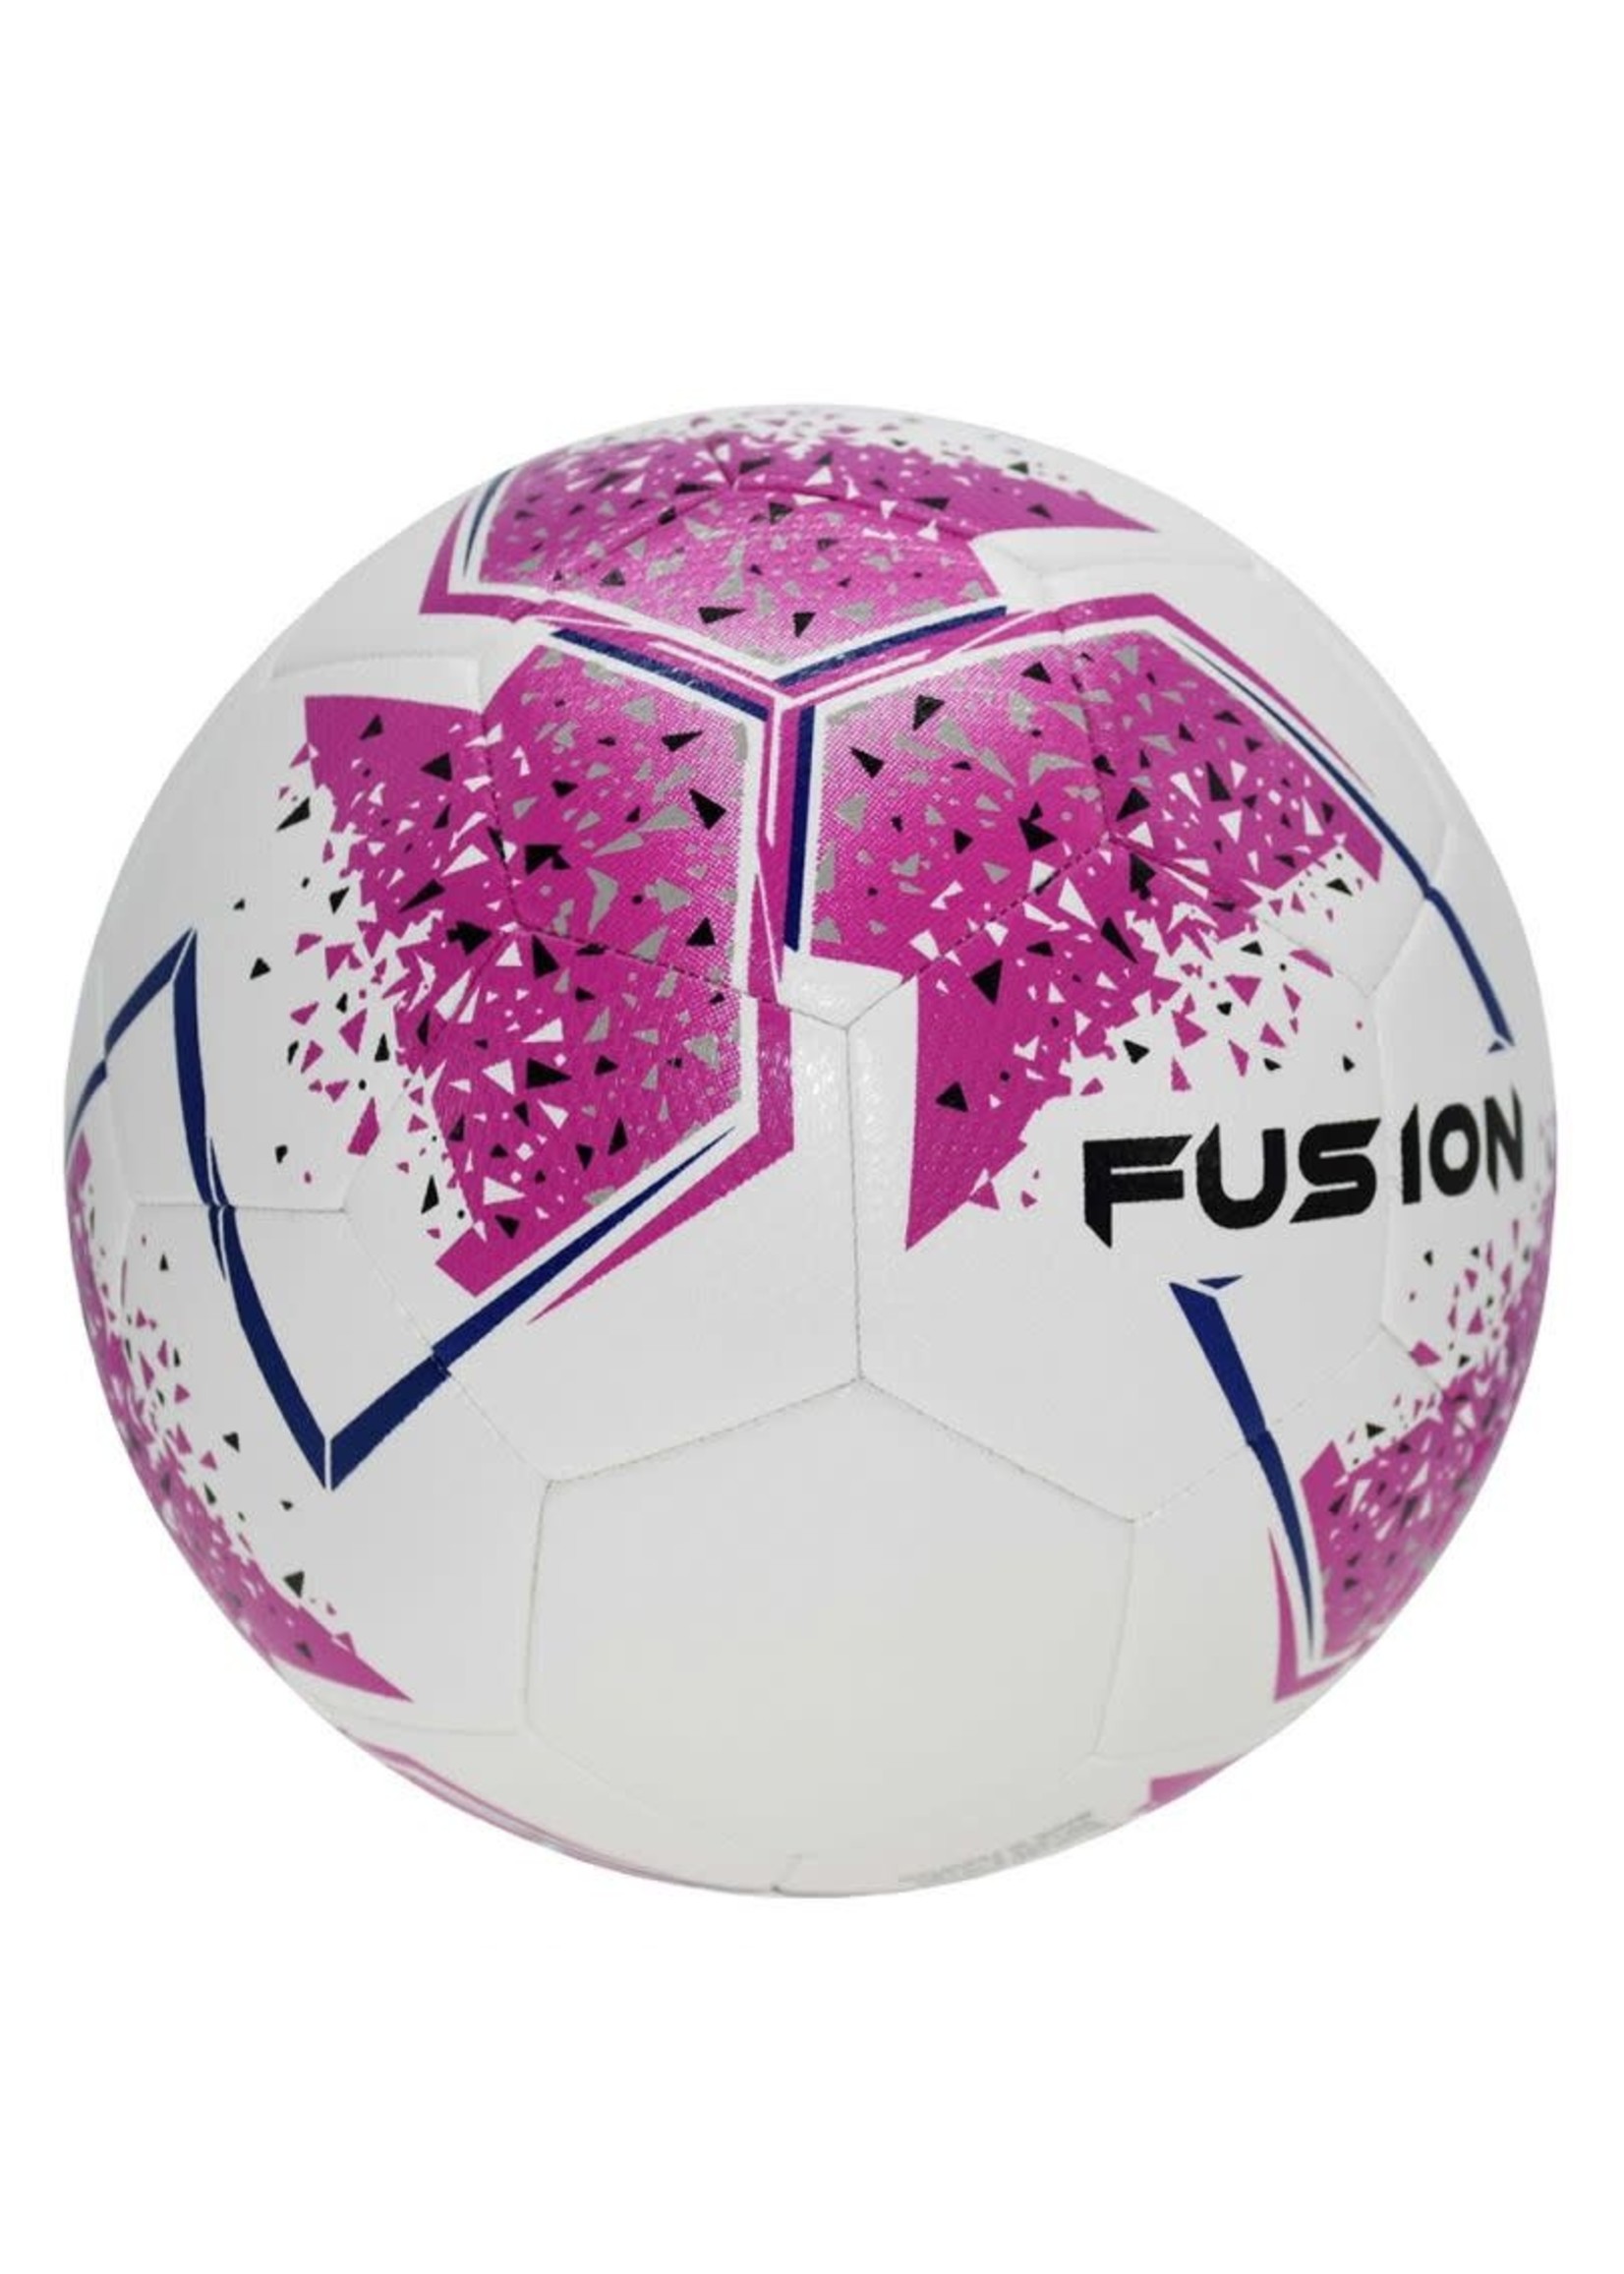 Precision Training Precision Fusion IMS Training Football - size 5 (2020)